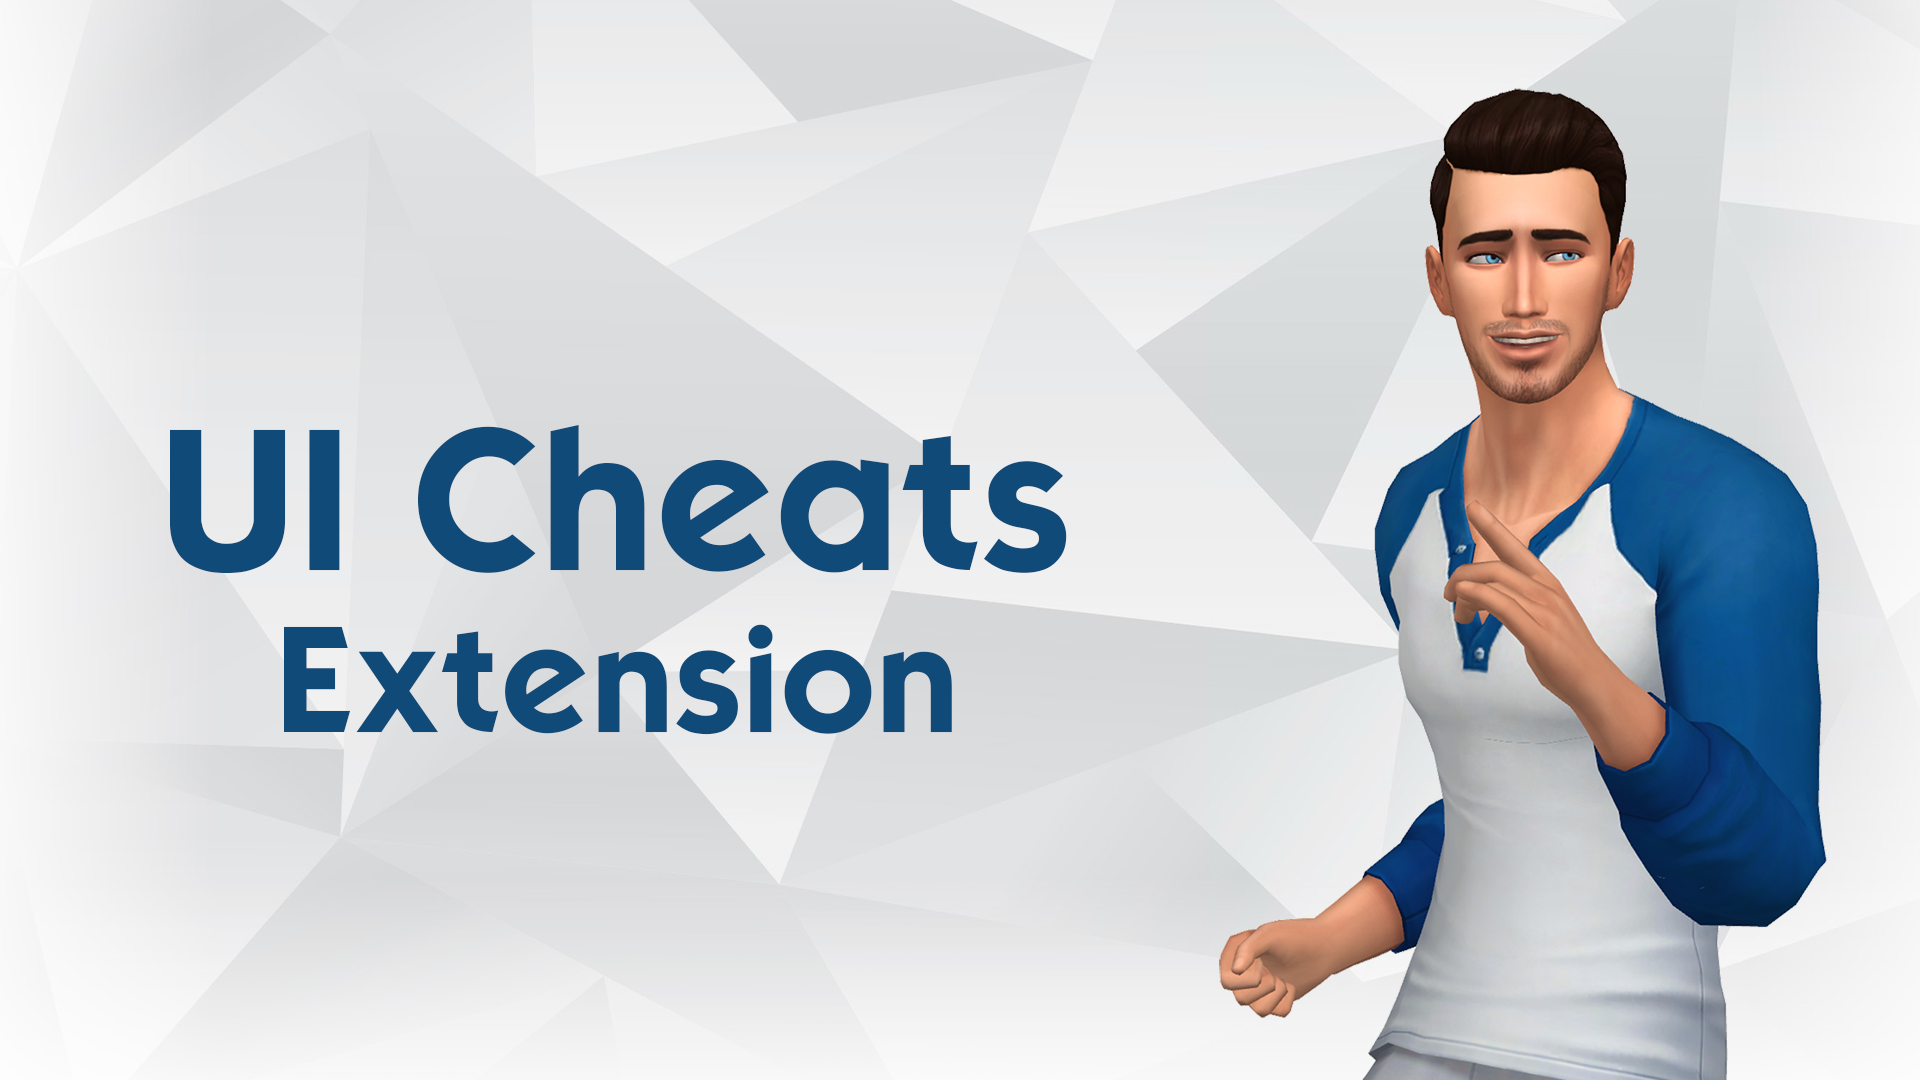 Cheats The Sims 4